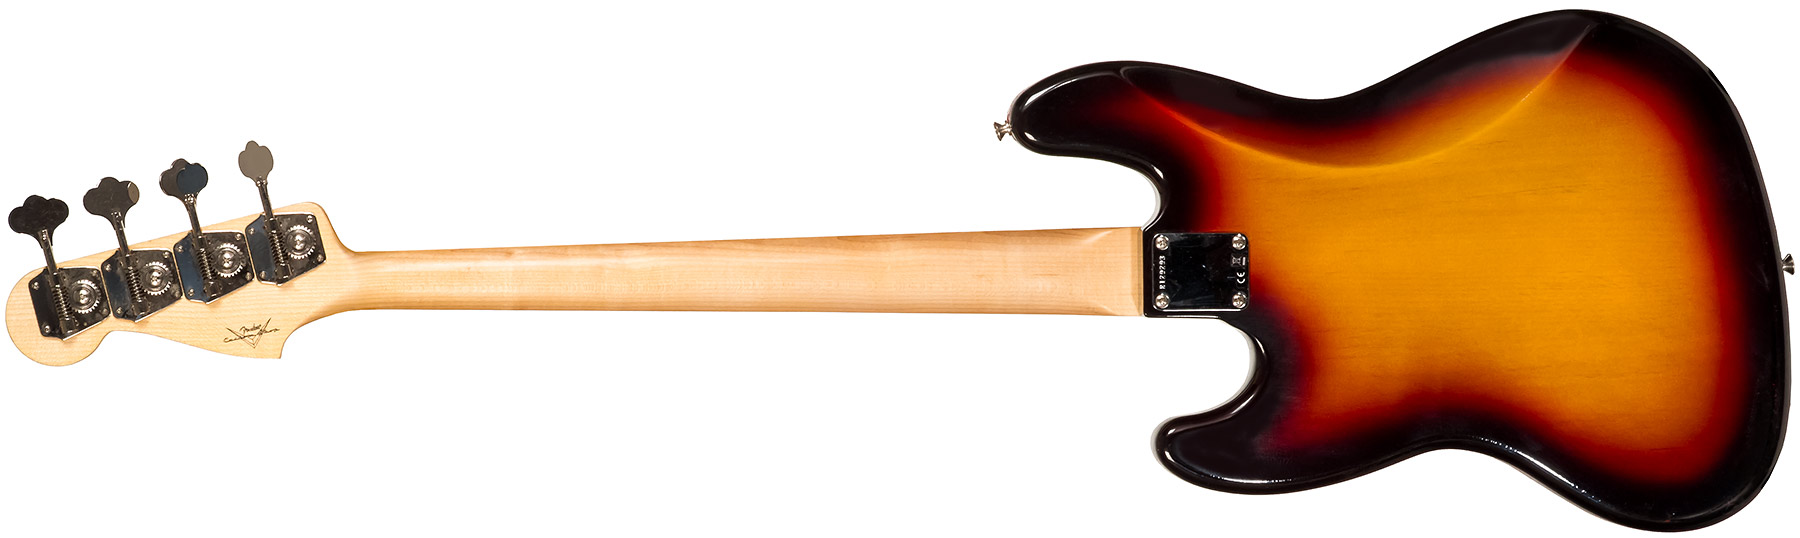 Fender Custom Shop Jazz Bass 1964 Rw #r129293 - Closet Classic 3-color Sunburst - Solid body elektrische bas - Variation 1